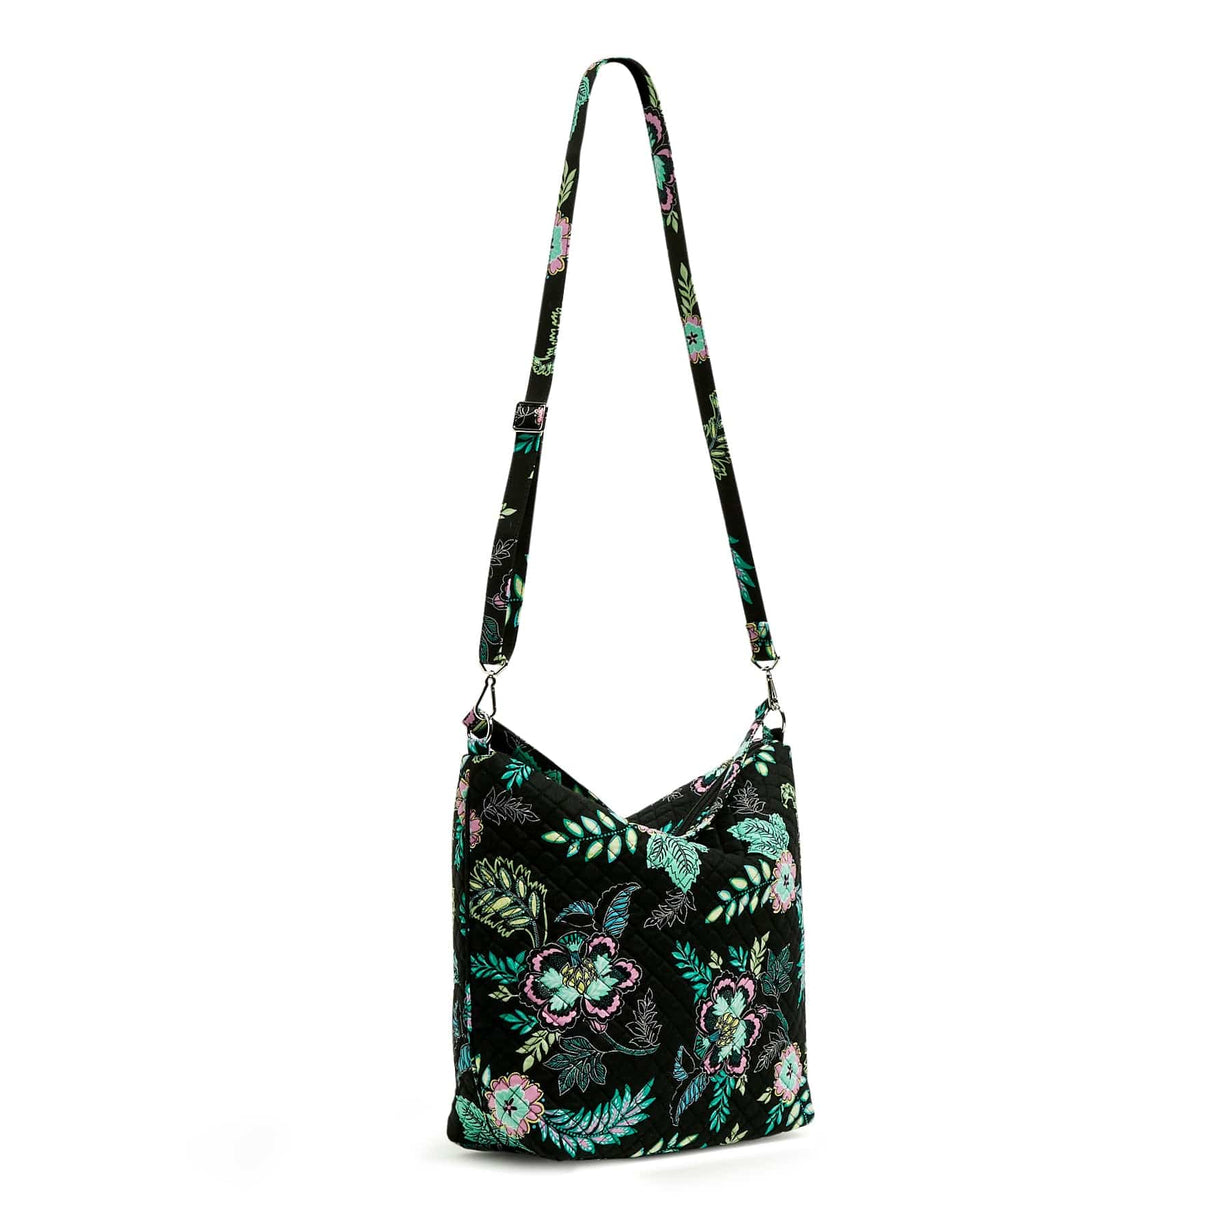 Sarah Jessica Parker debuts Fendi's new It Bag (UPDATED) - PurseBlog